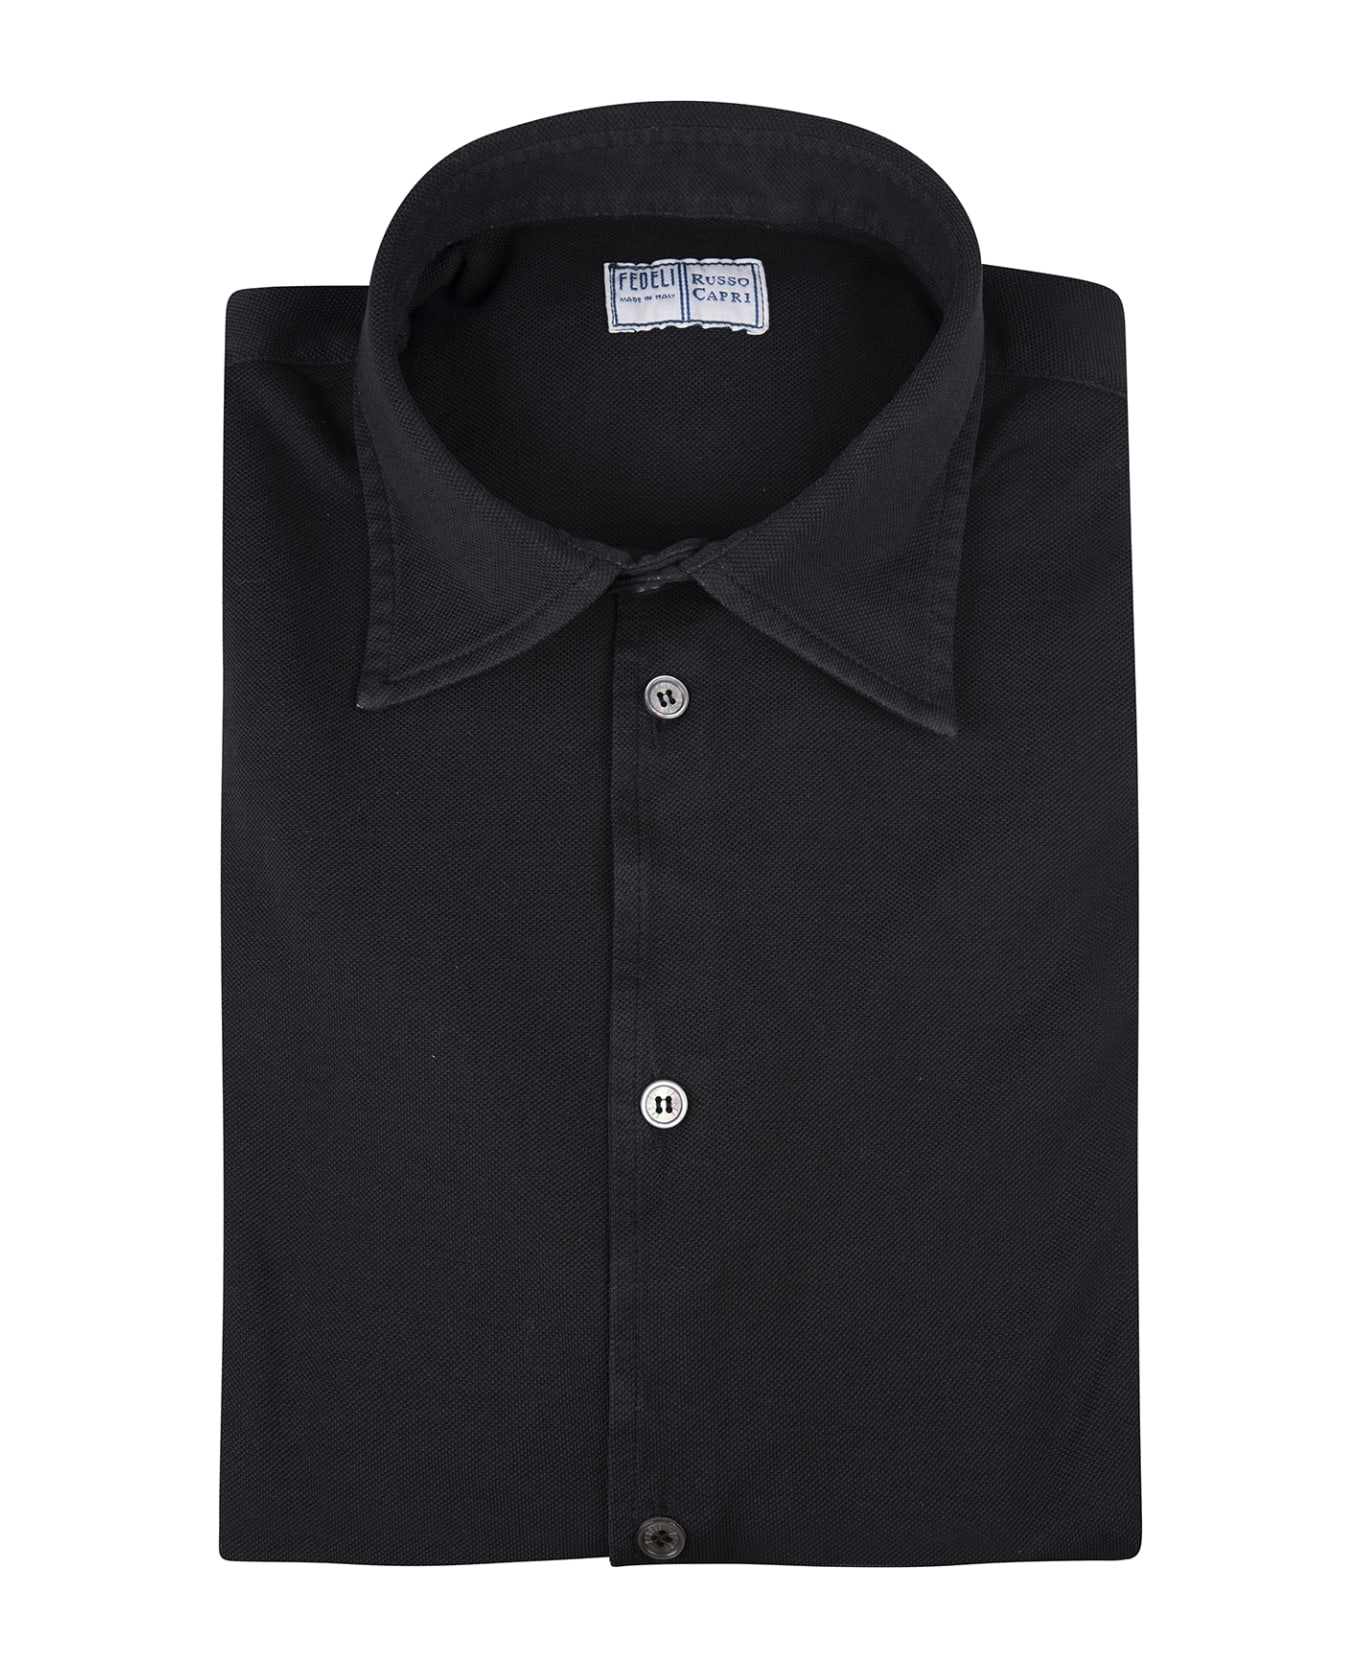 Fedeli Teorema Shirt In Black Cotton Piqué - Black シャツ